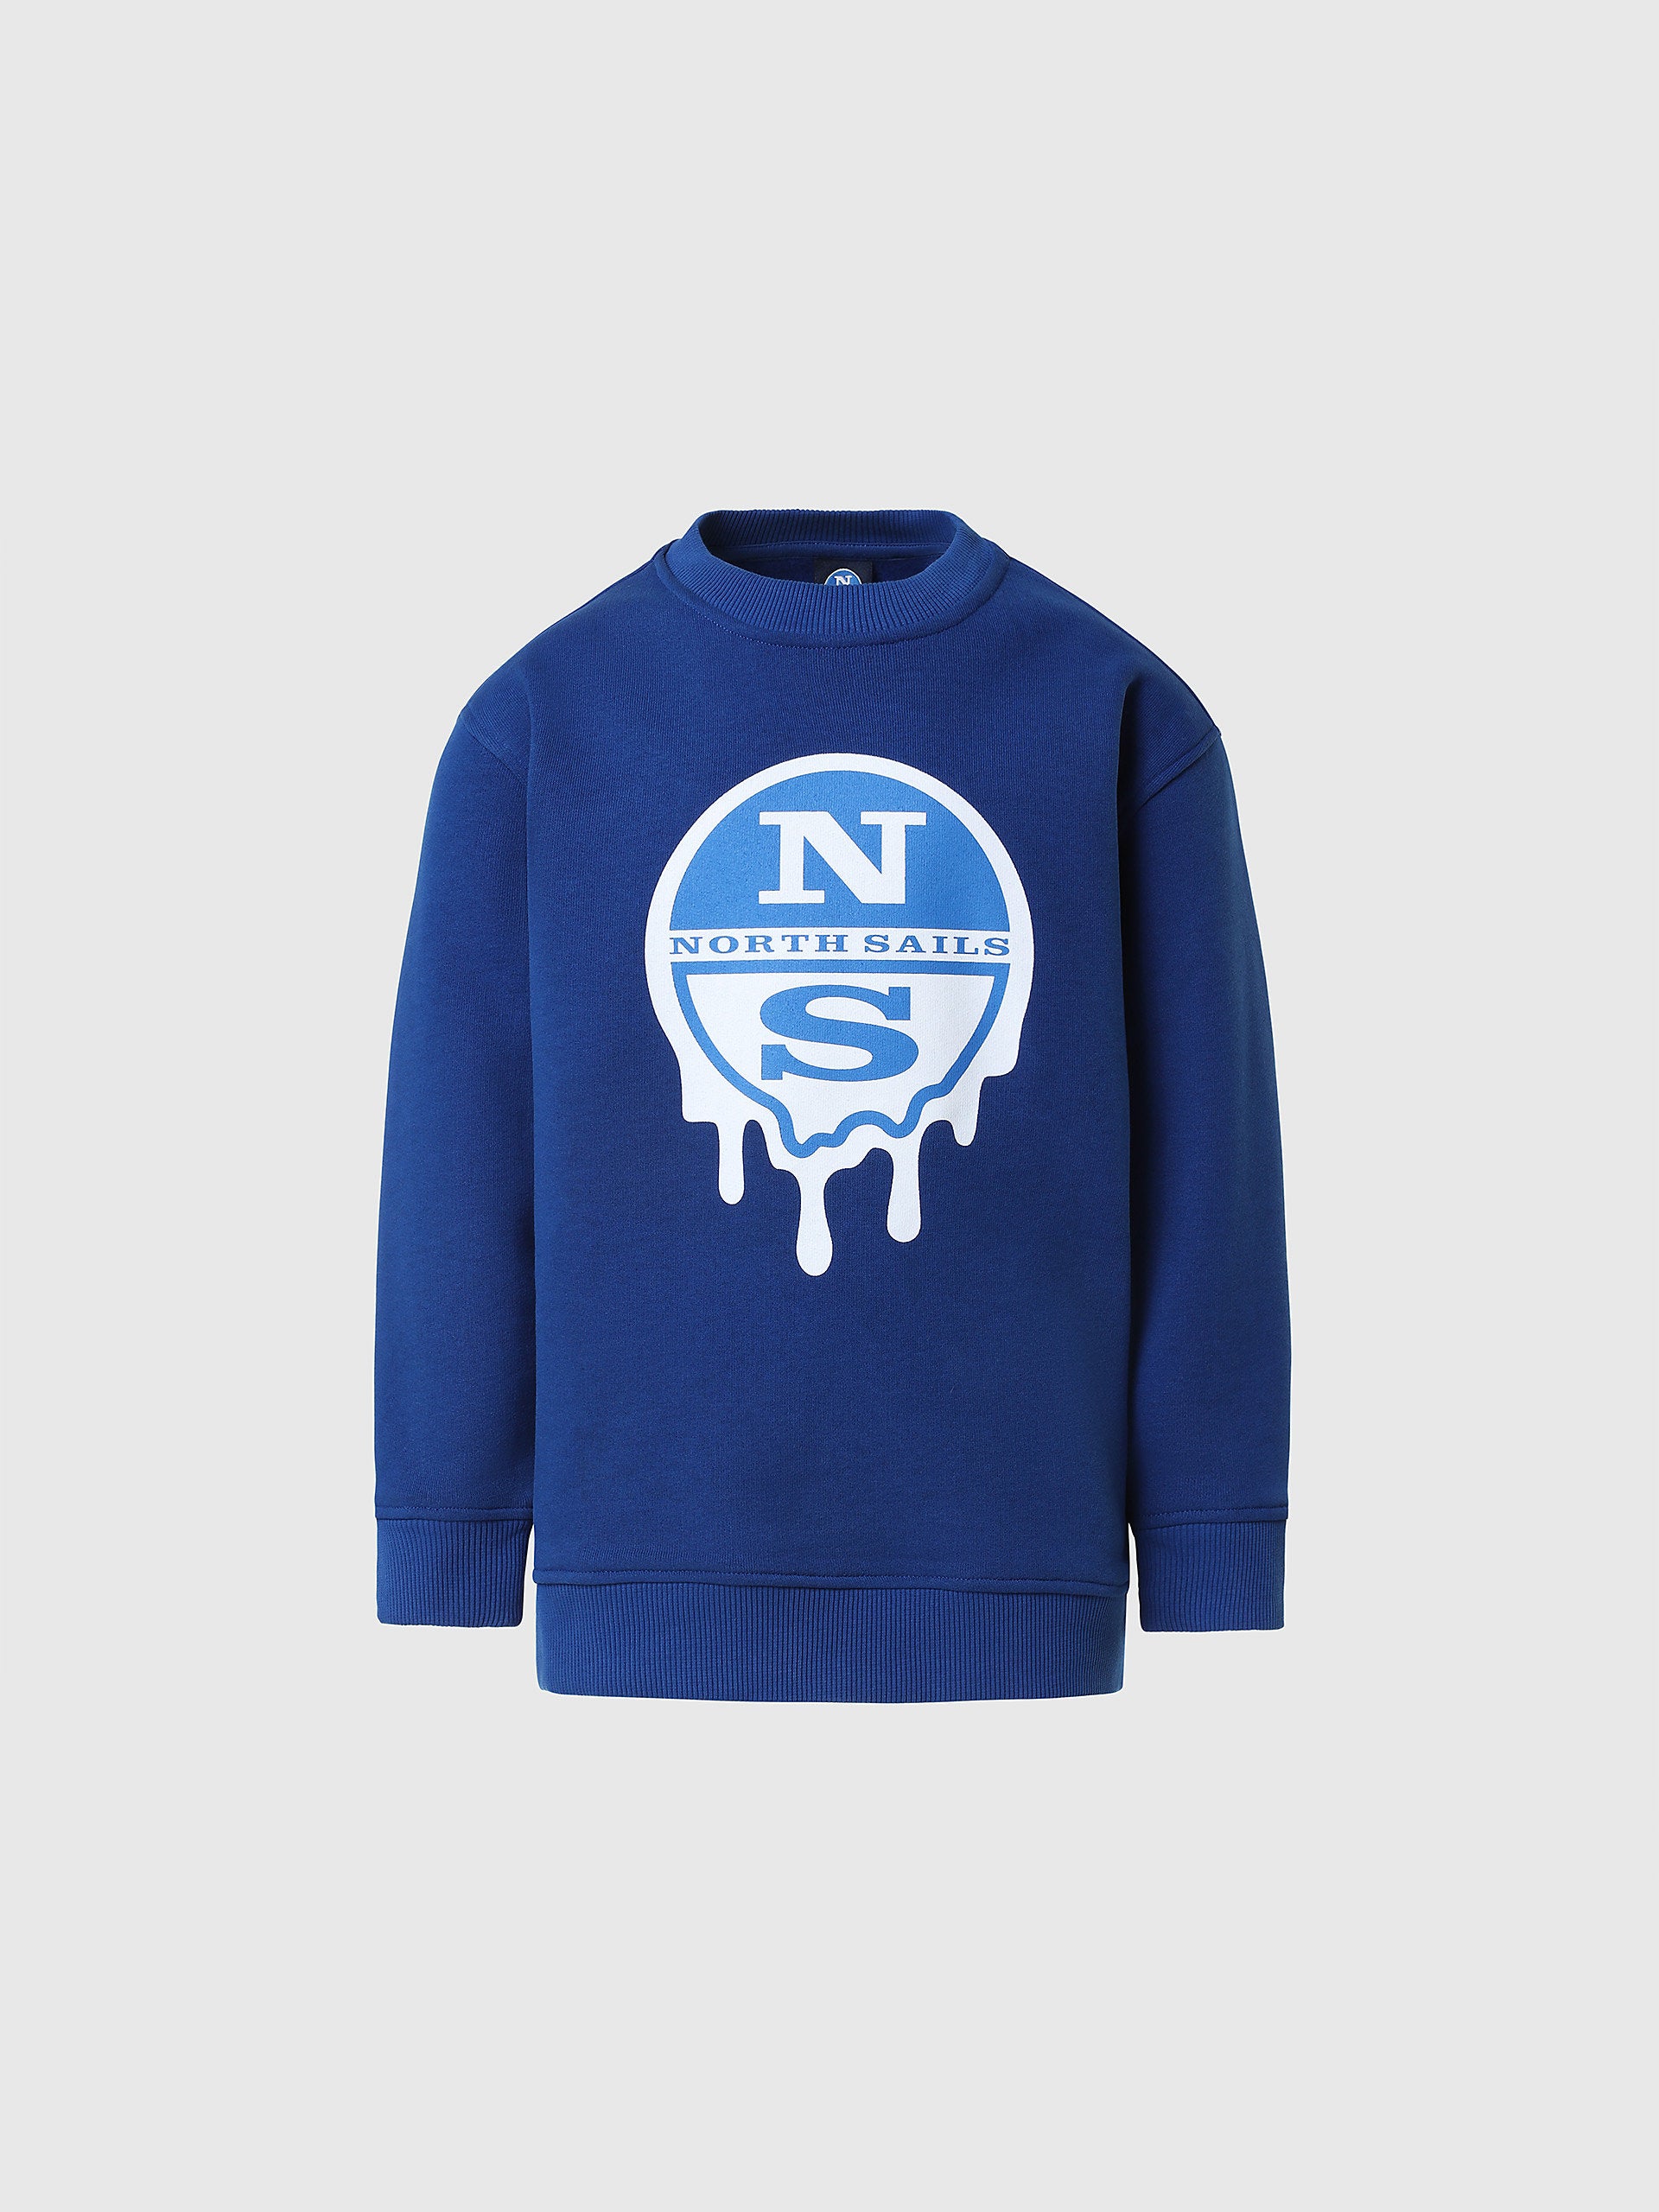 North Sails - Sweatshirt with maxi logoNorth SailsOcean blue8